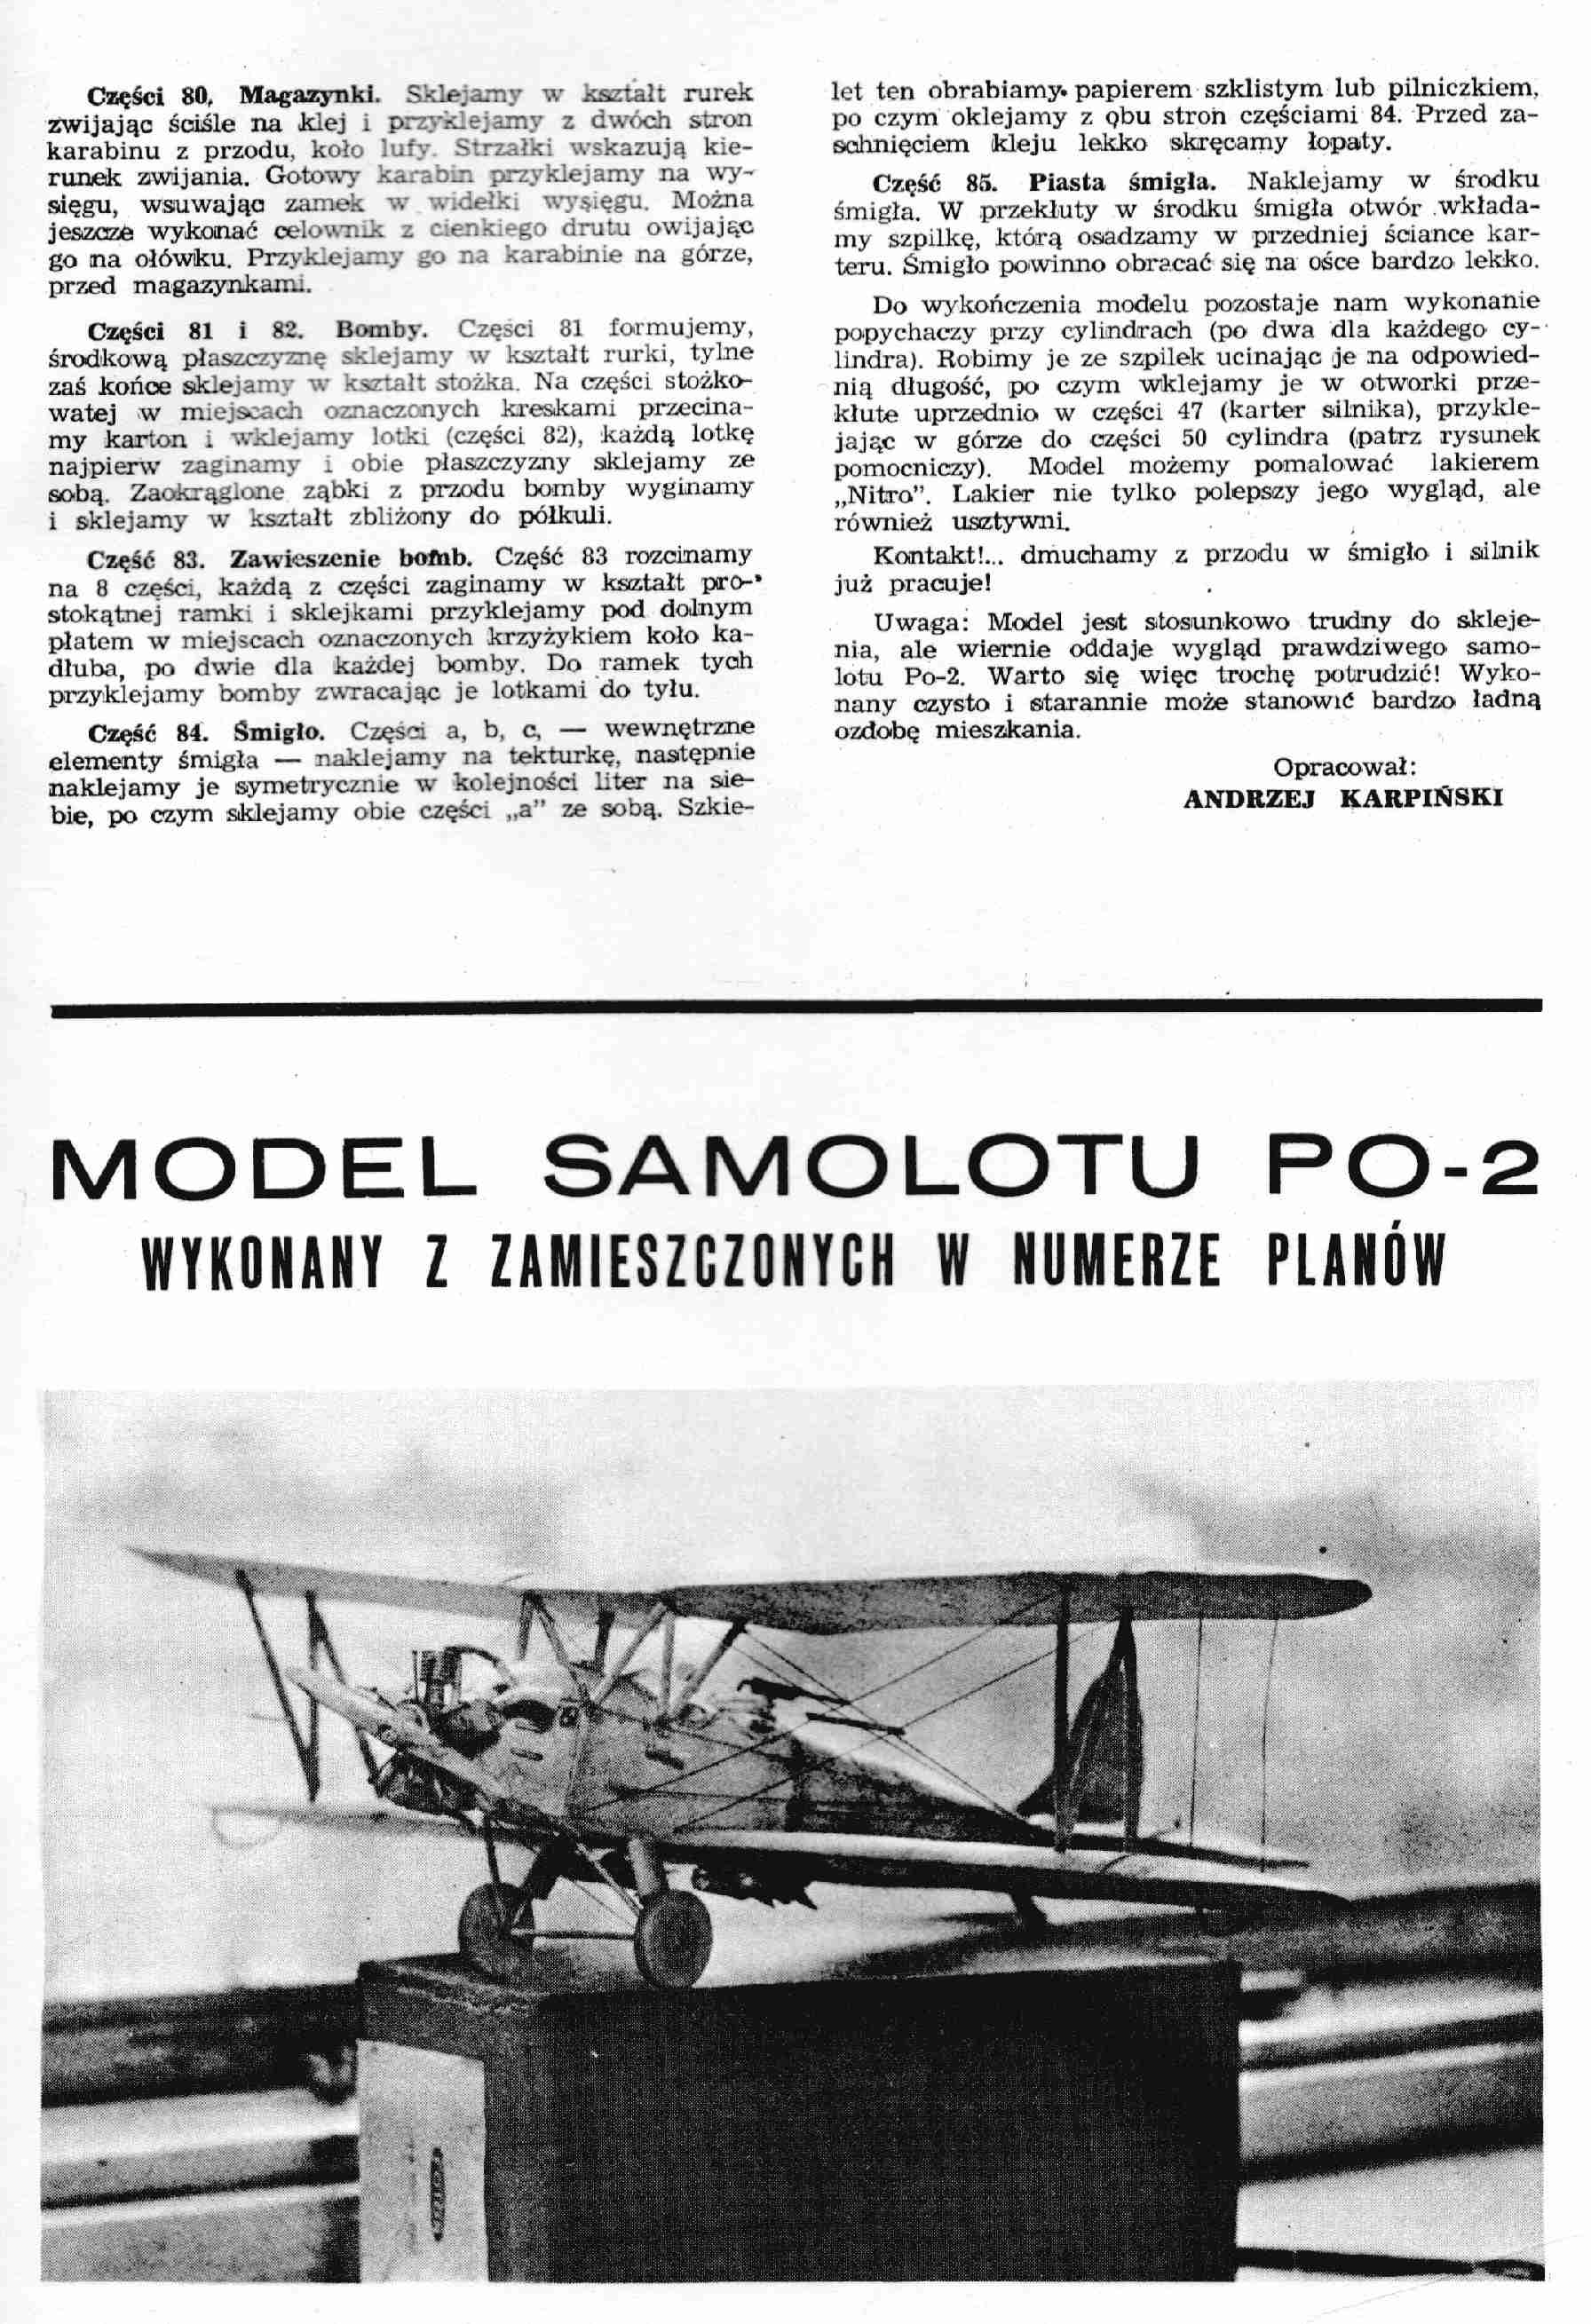 "Maly Modelarz" 11, 1960 7 с.